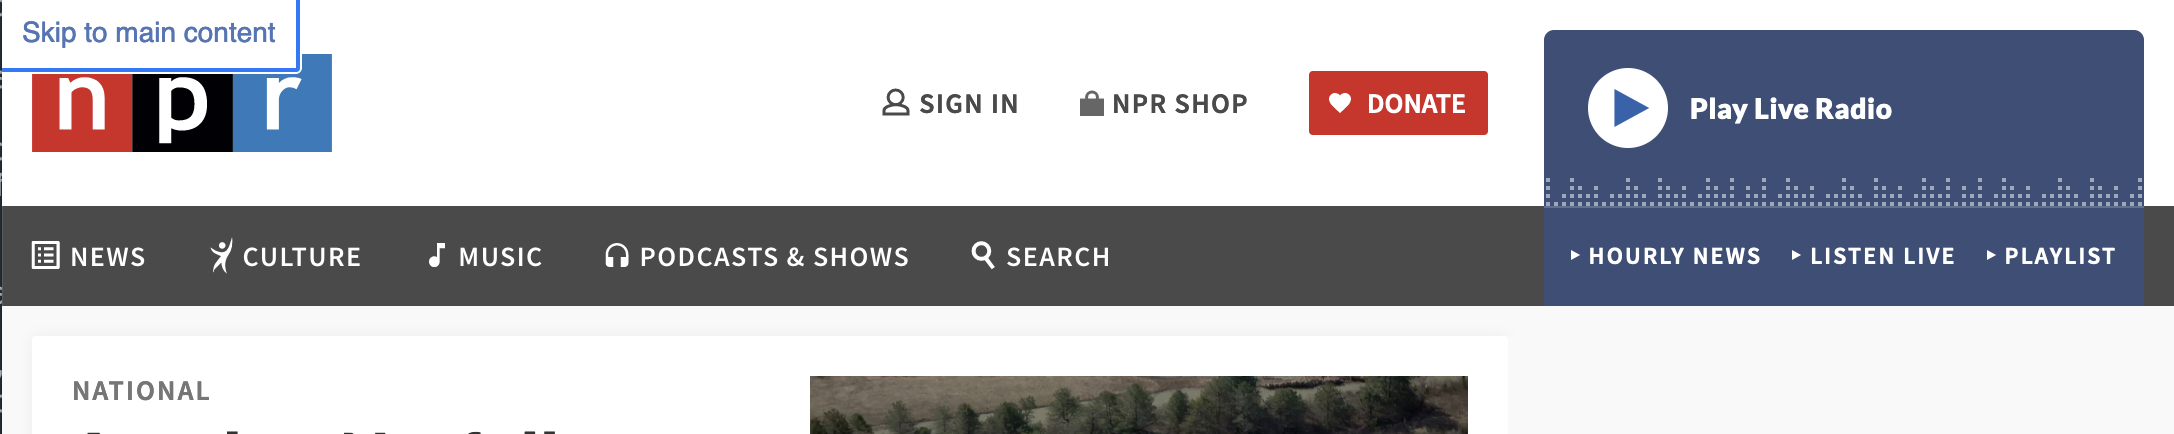 NPR.org has a skiplink, displayed atop the global banner of their website